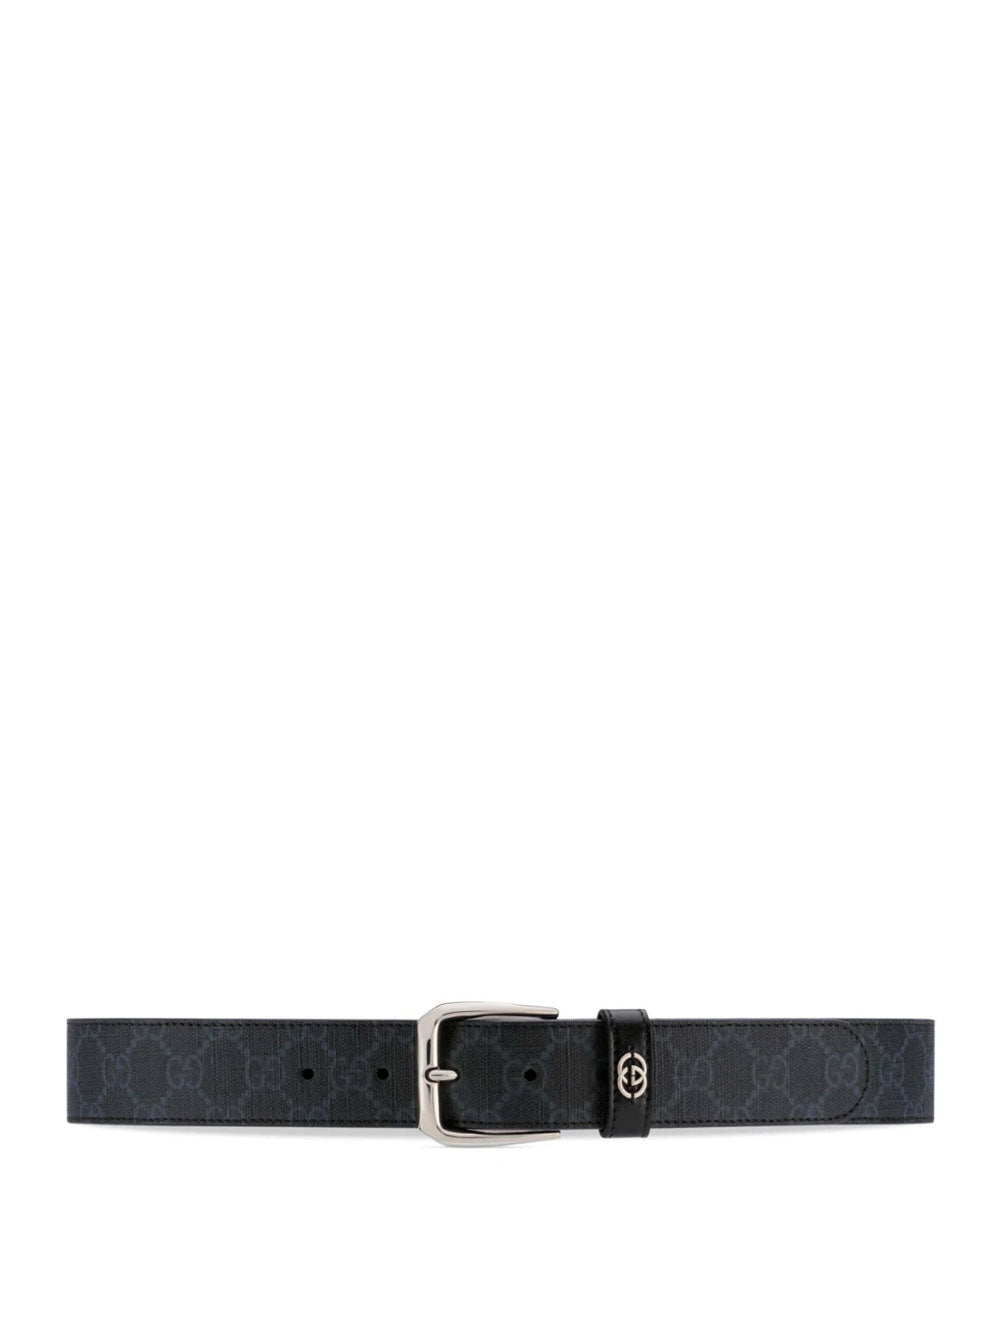 Leather adjustable belt